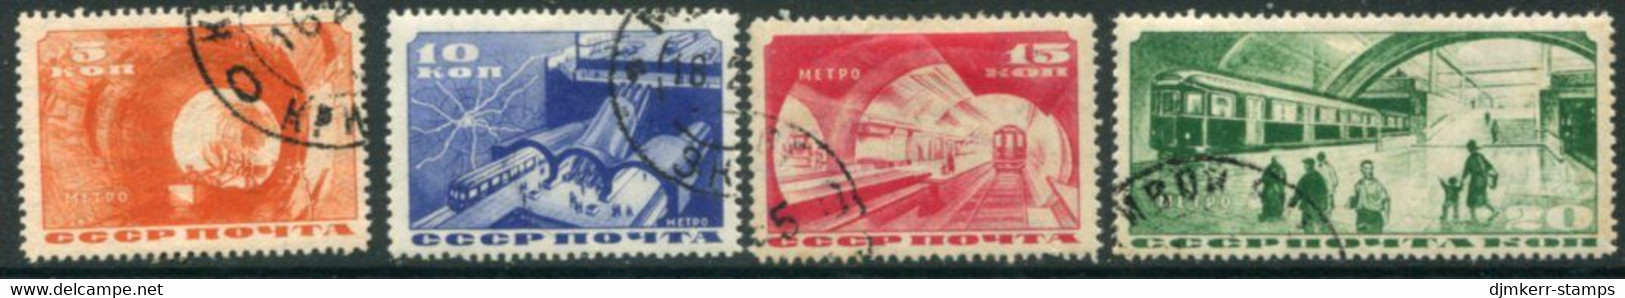 SOVIET UNION 1935 Opening Of Moscow Metro Set, Fine Used.  Michel 509-12 - Usati